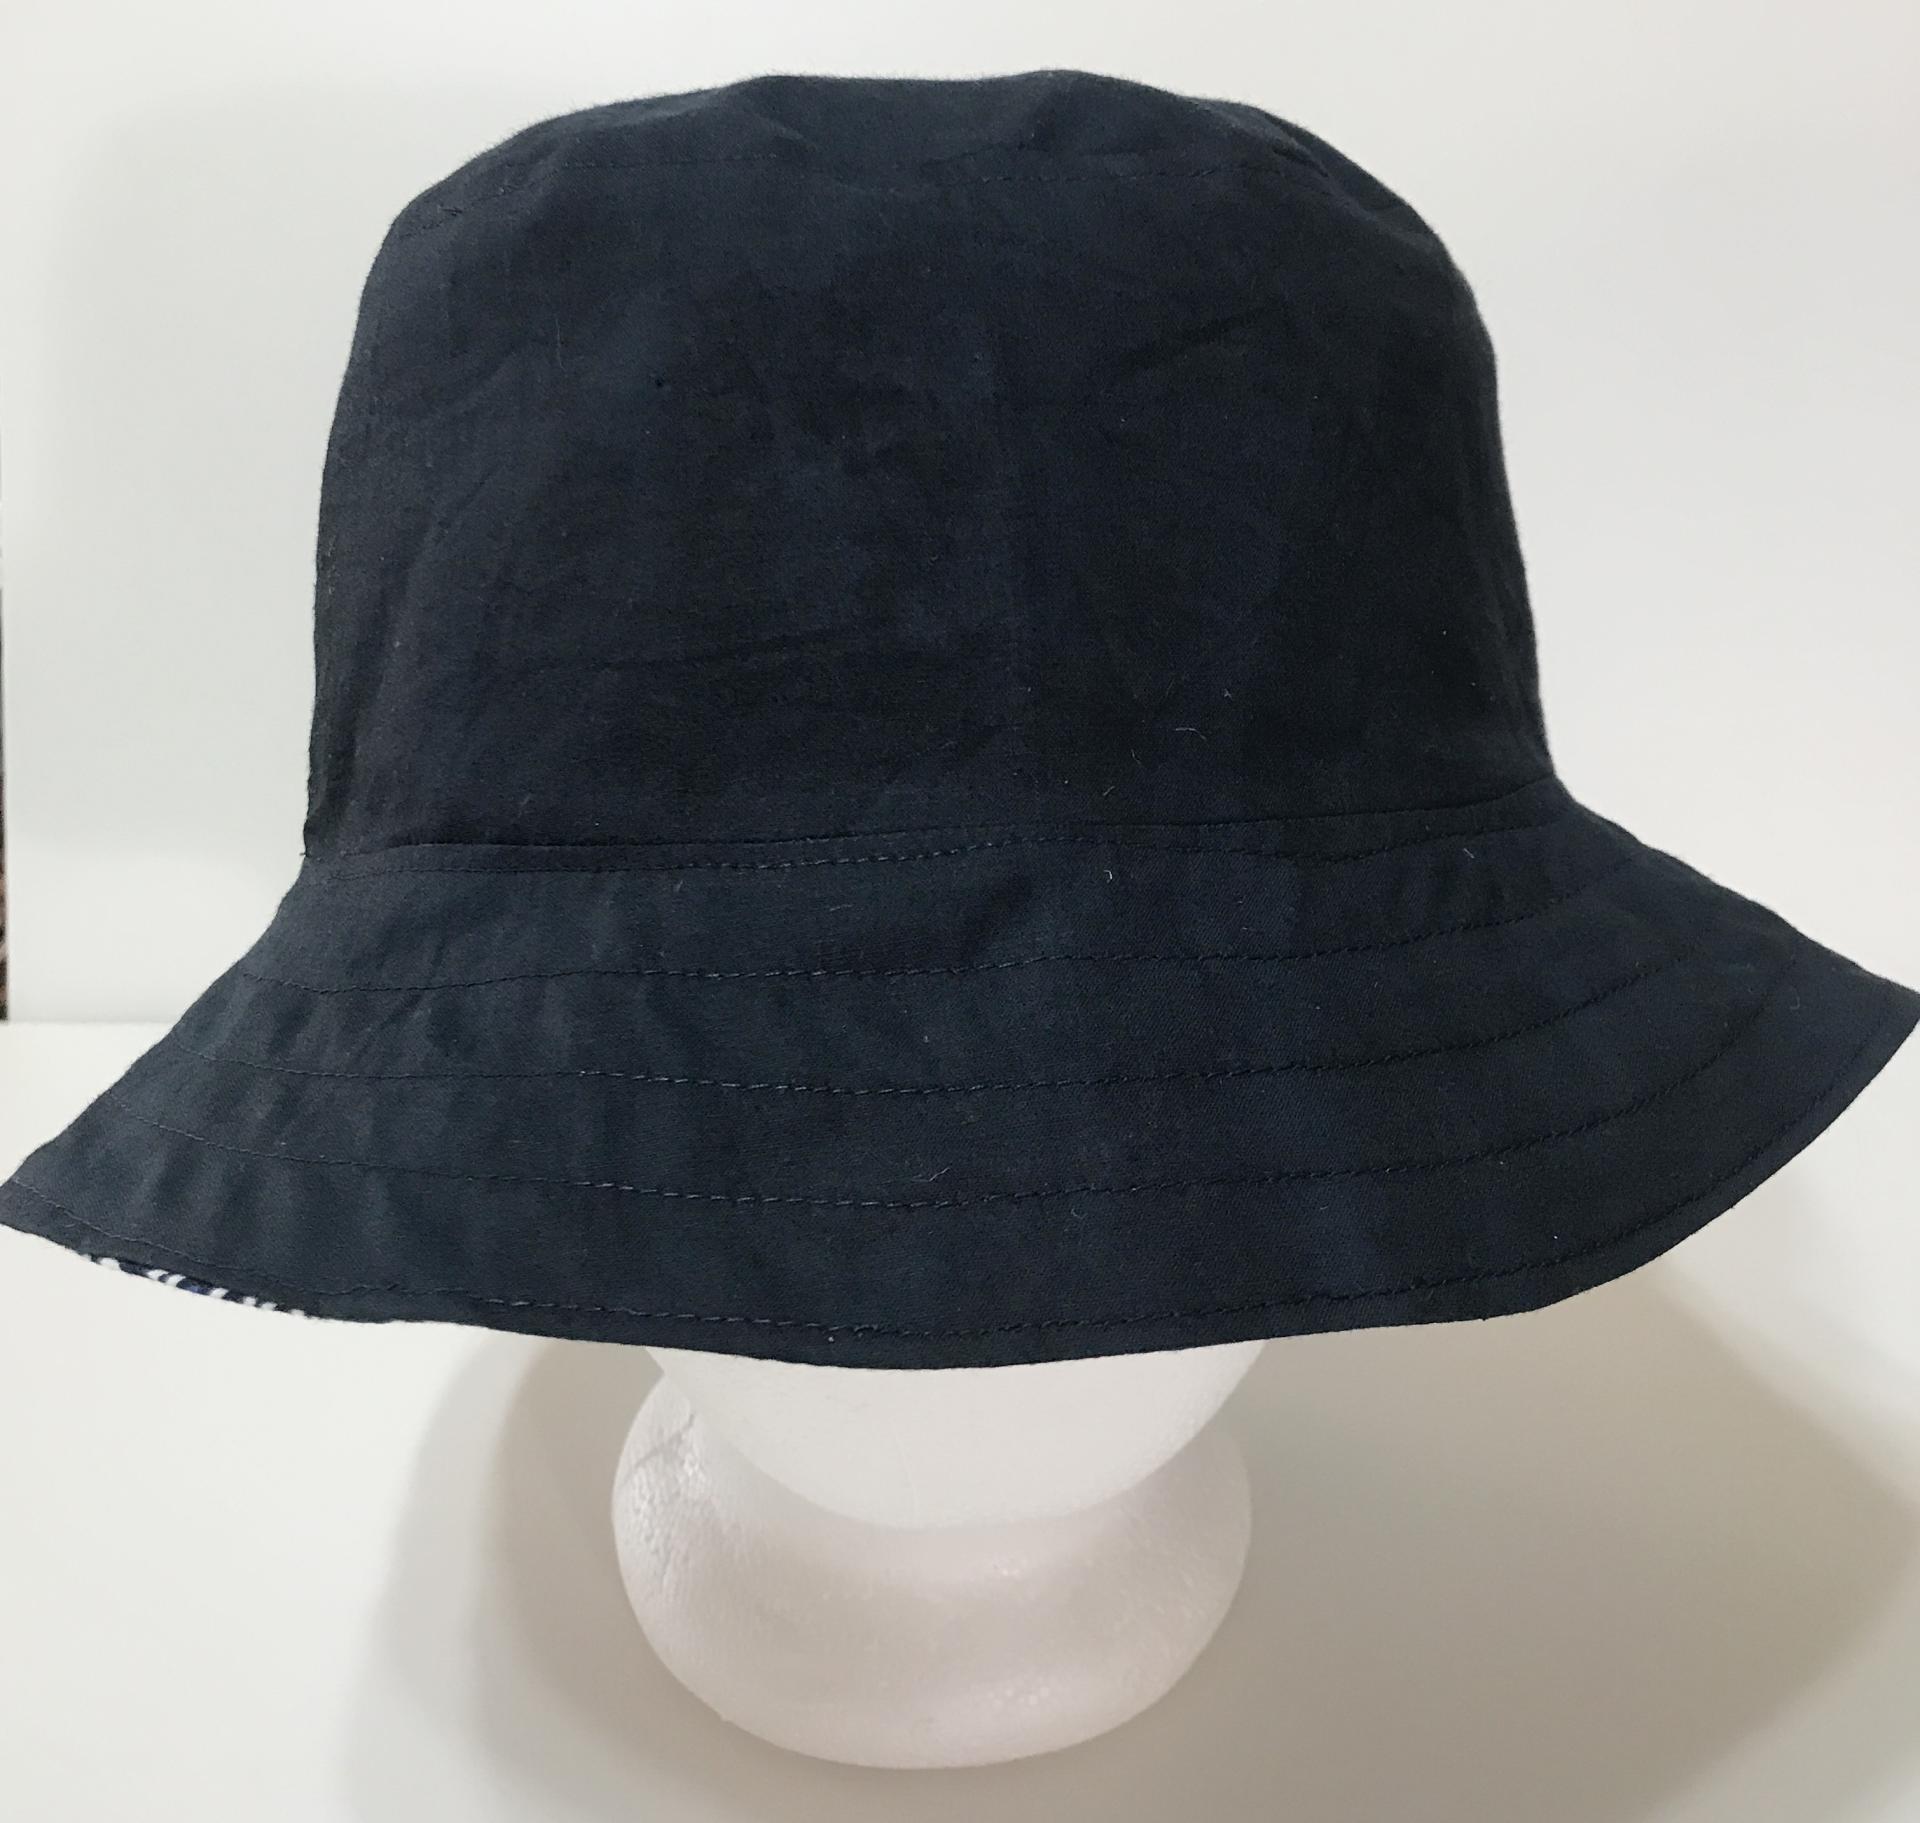 Columbus Blue Jackets Bucket Hat, Reversible, Ohio Hockey, Unisex Adult Sizes S-XXL, handmade, cotton, summer fishing hat, sun hat, floppy hat